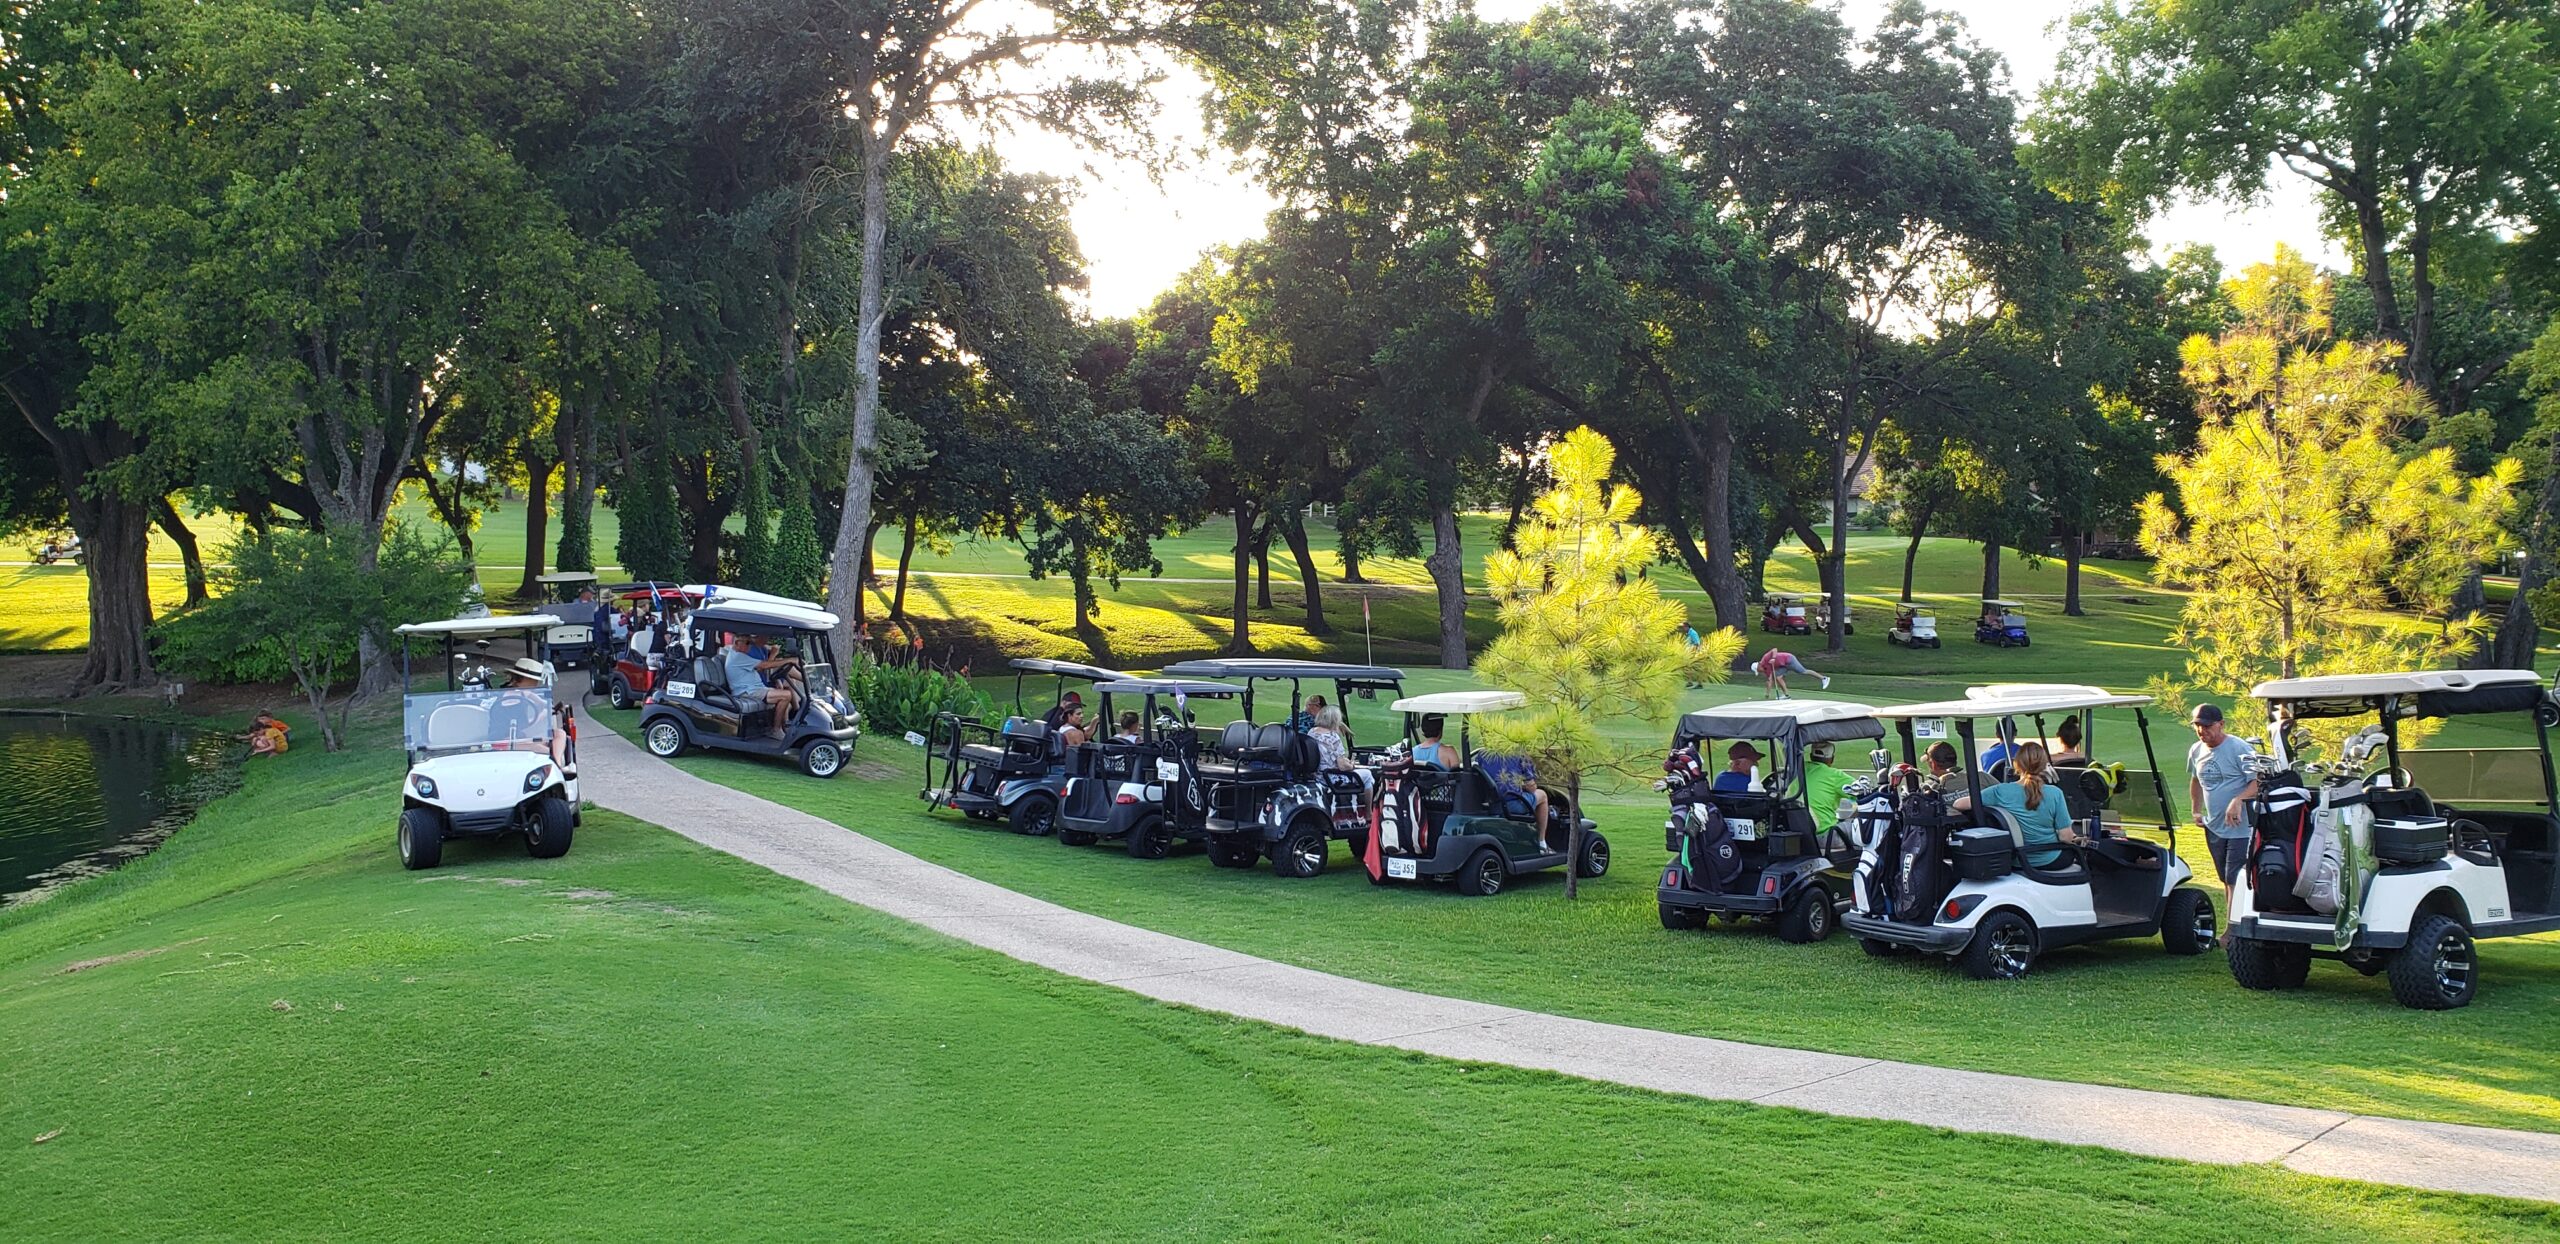 golf-carts